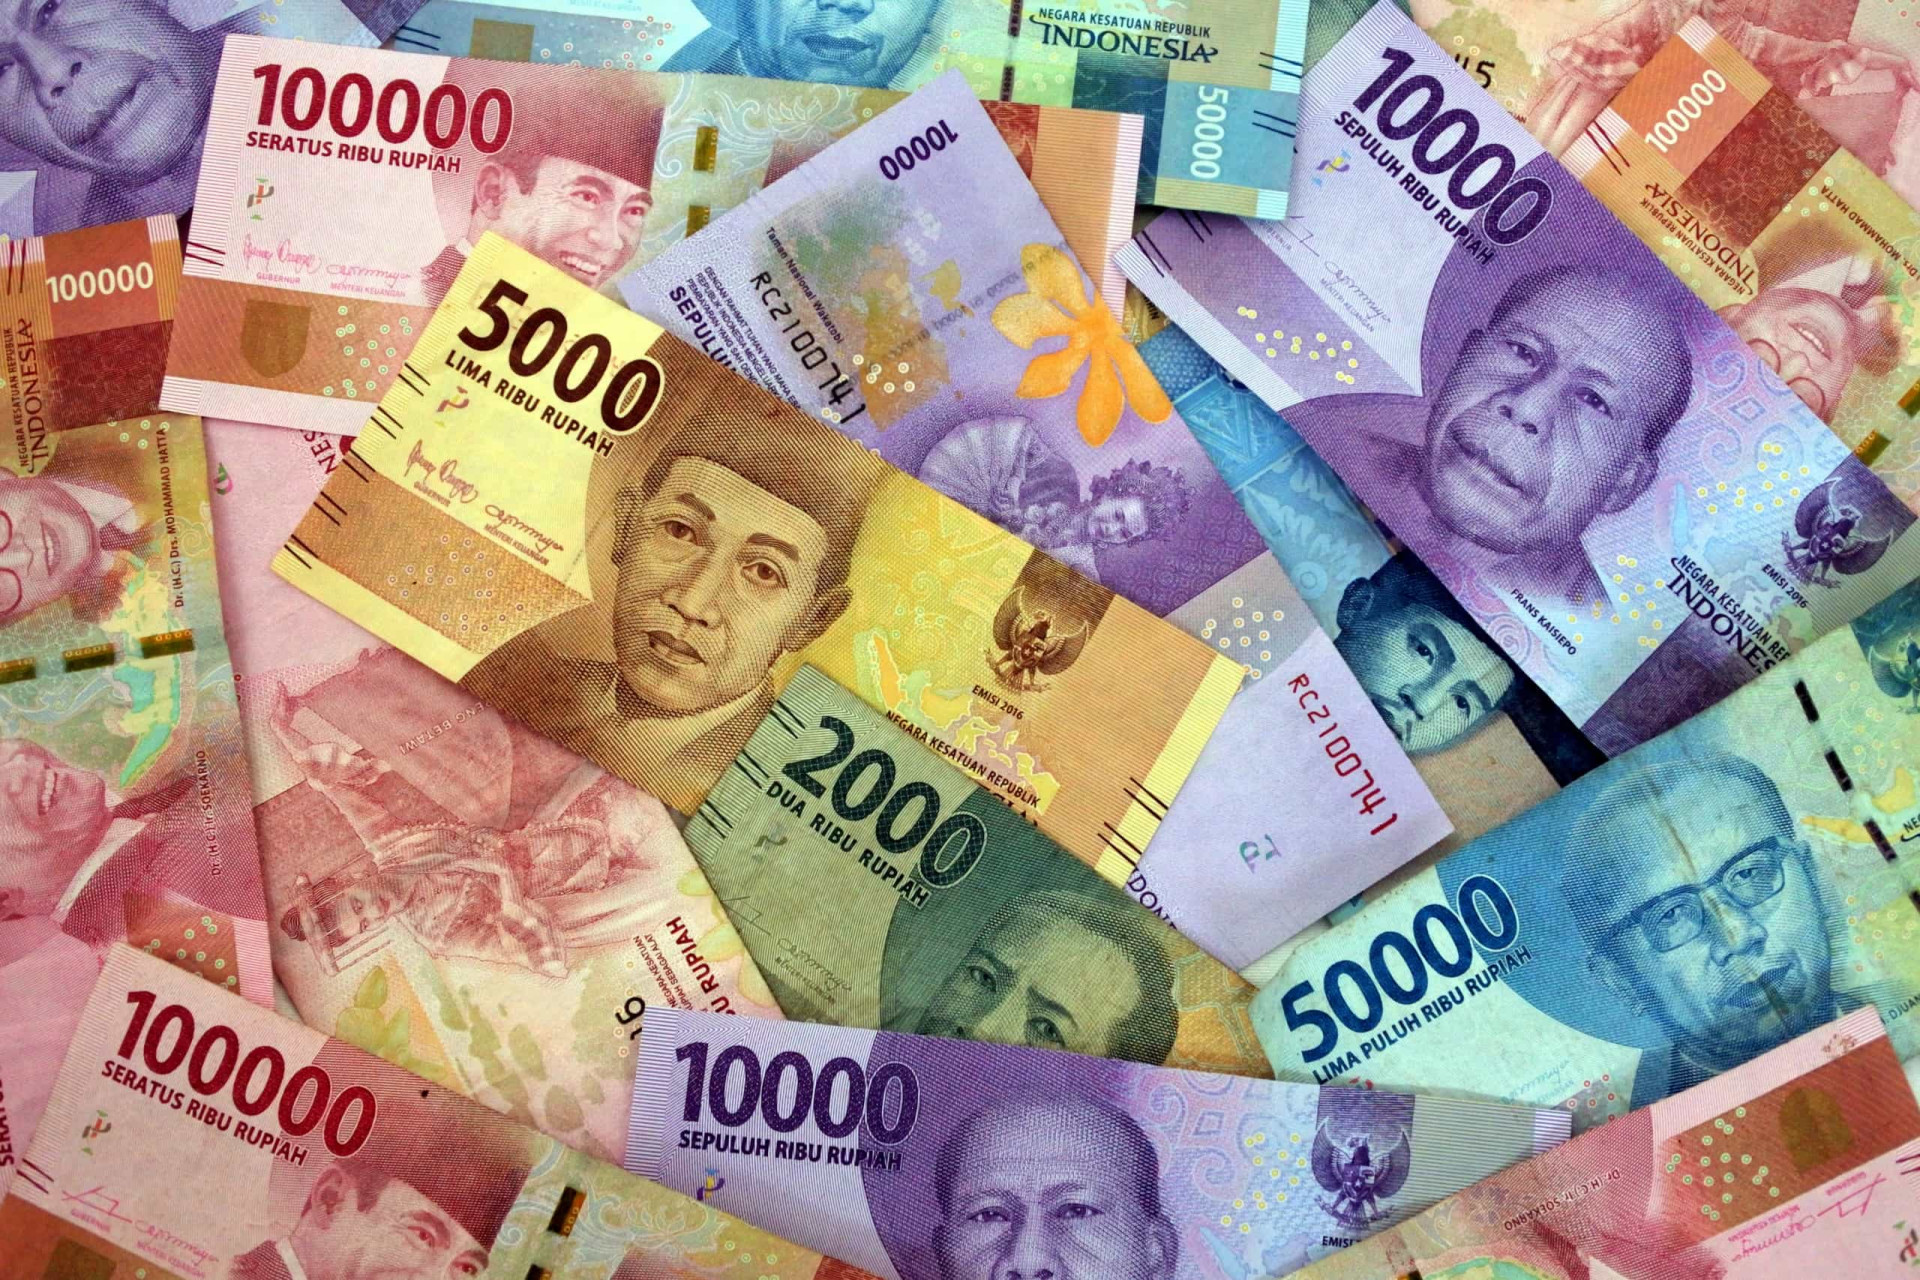 Idr в рублях. Валюта Бали. Балийские рупии. Валюта Индонезии. Indonesia валюта.